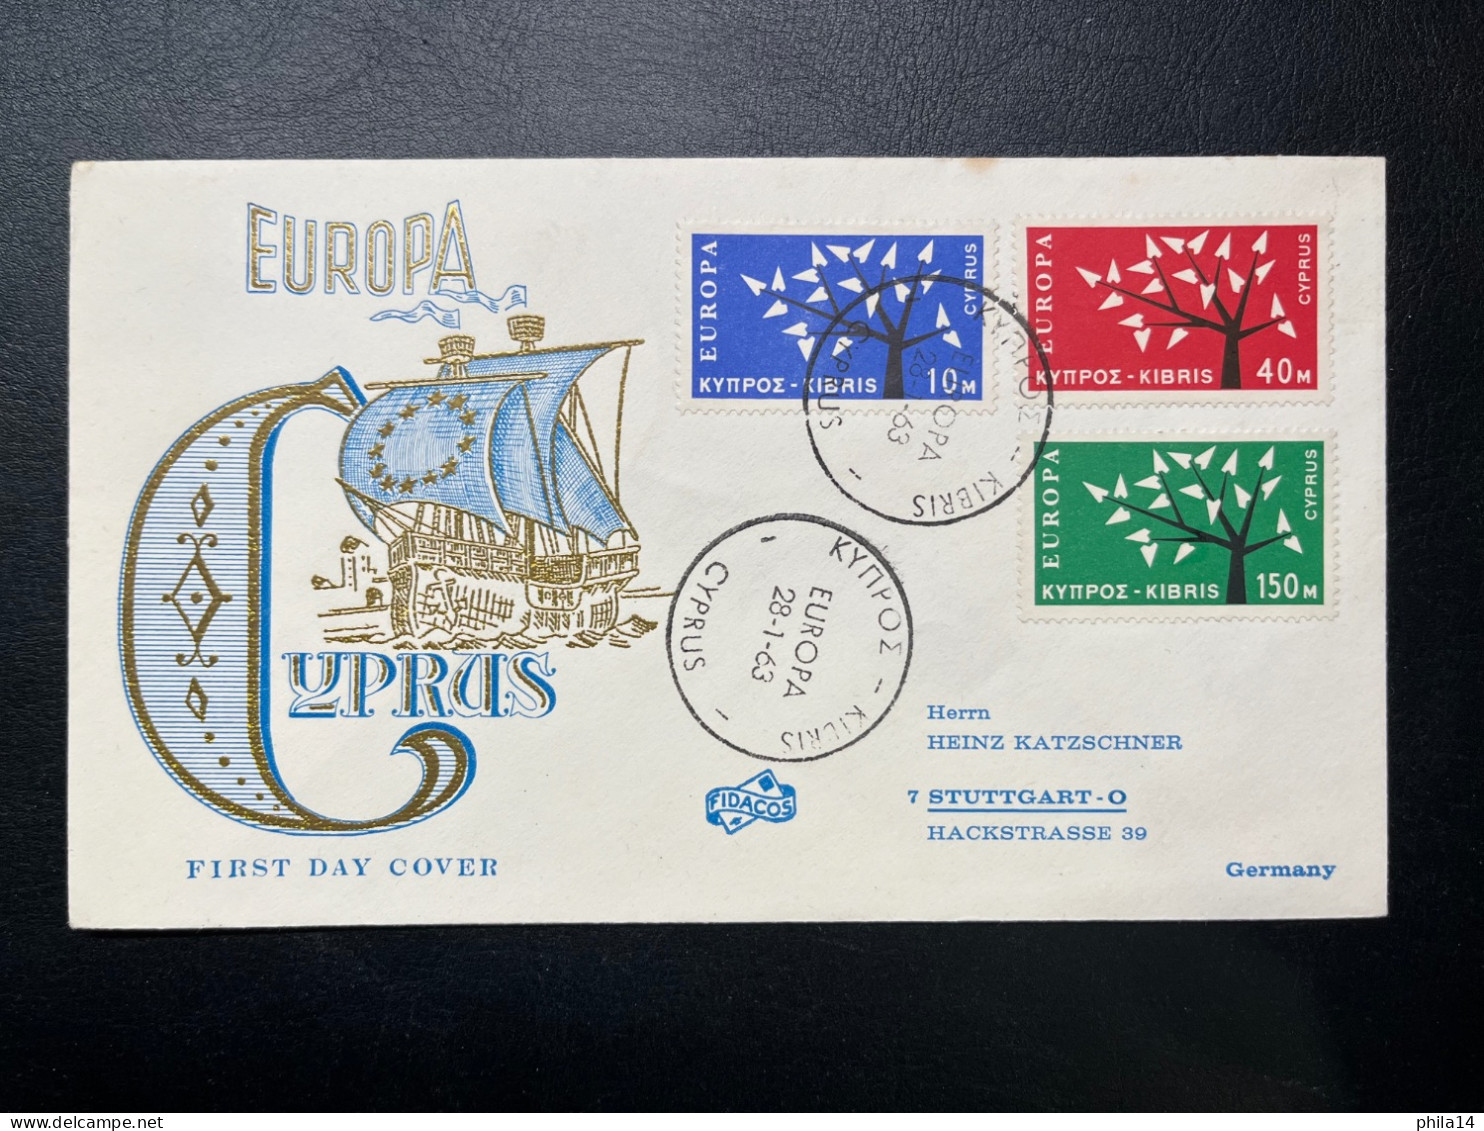 ENVELOPPE EUROPA / CYPRUS CHYPRE / FDC 1963 - Cartas